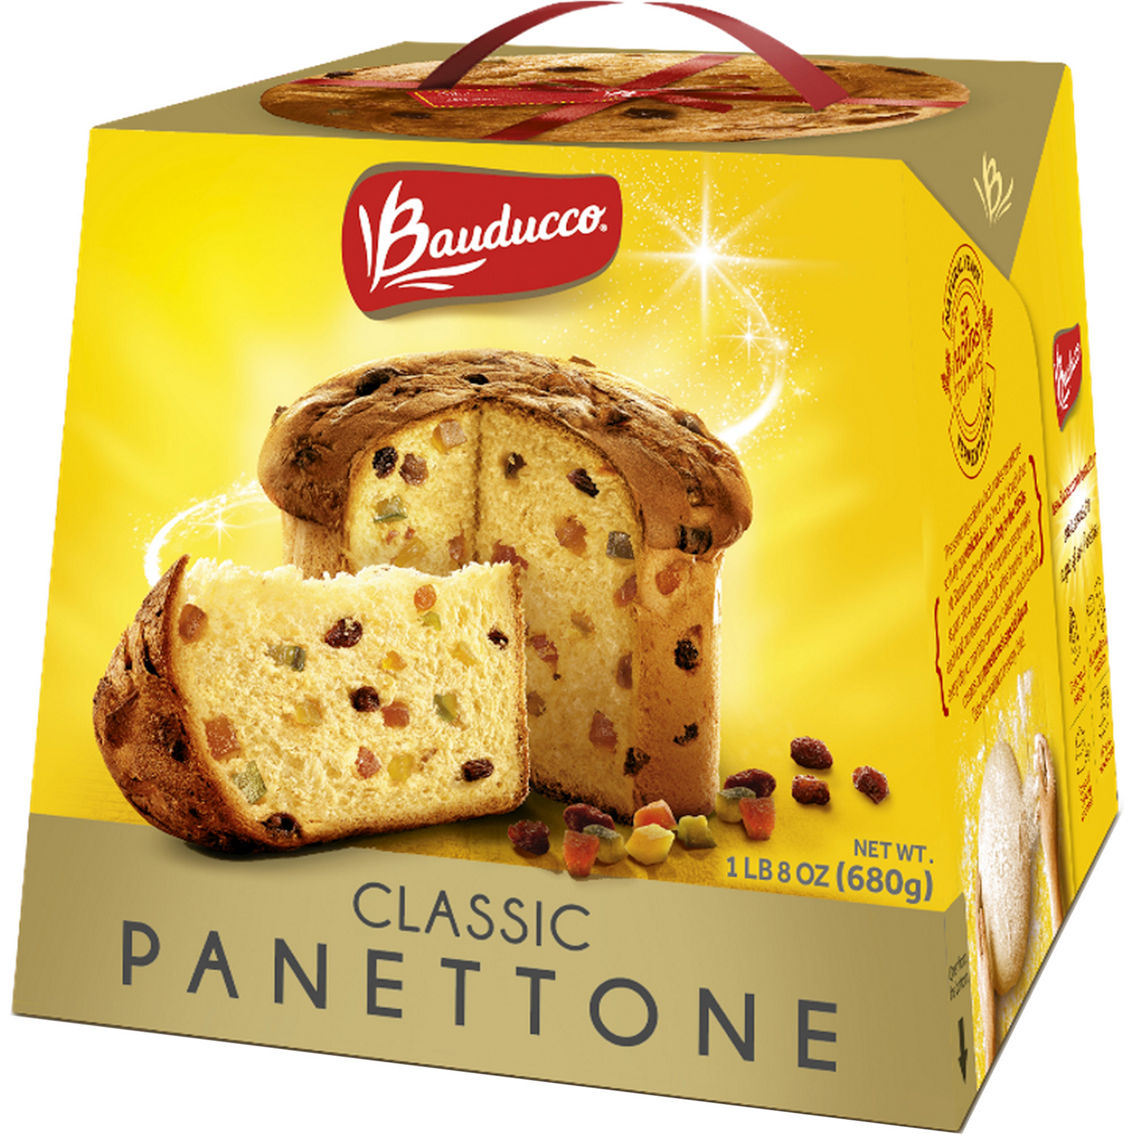 Bauducco Panettone Classic 24 oz. Cake - Image 1 of 2